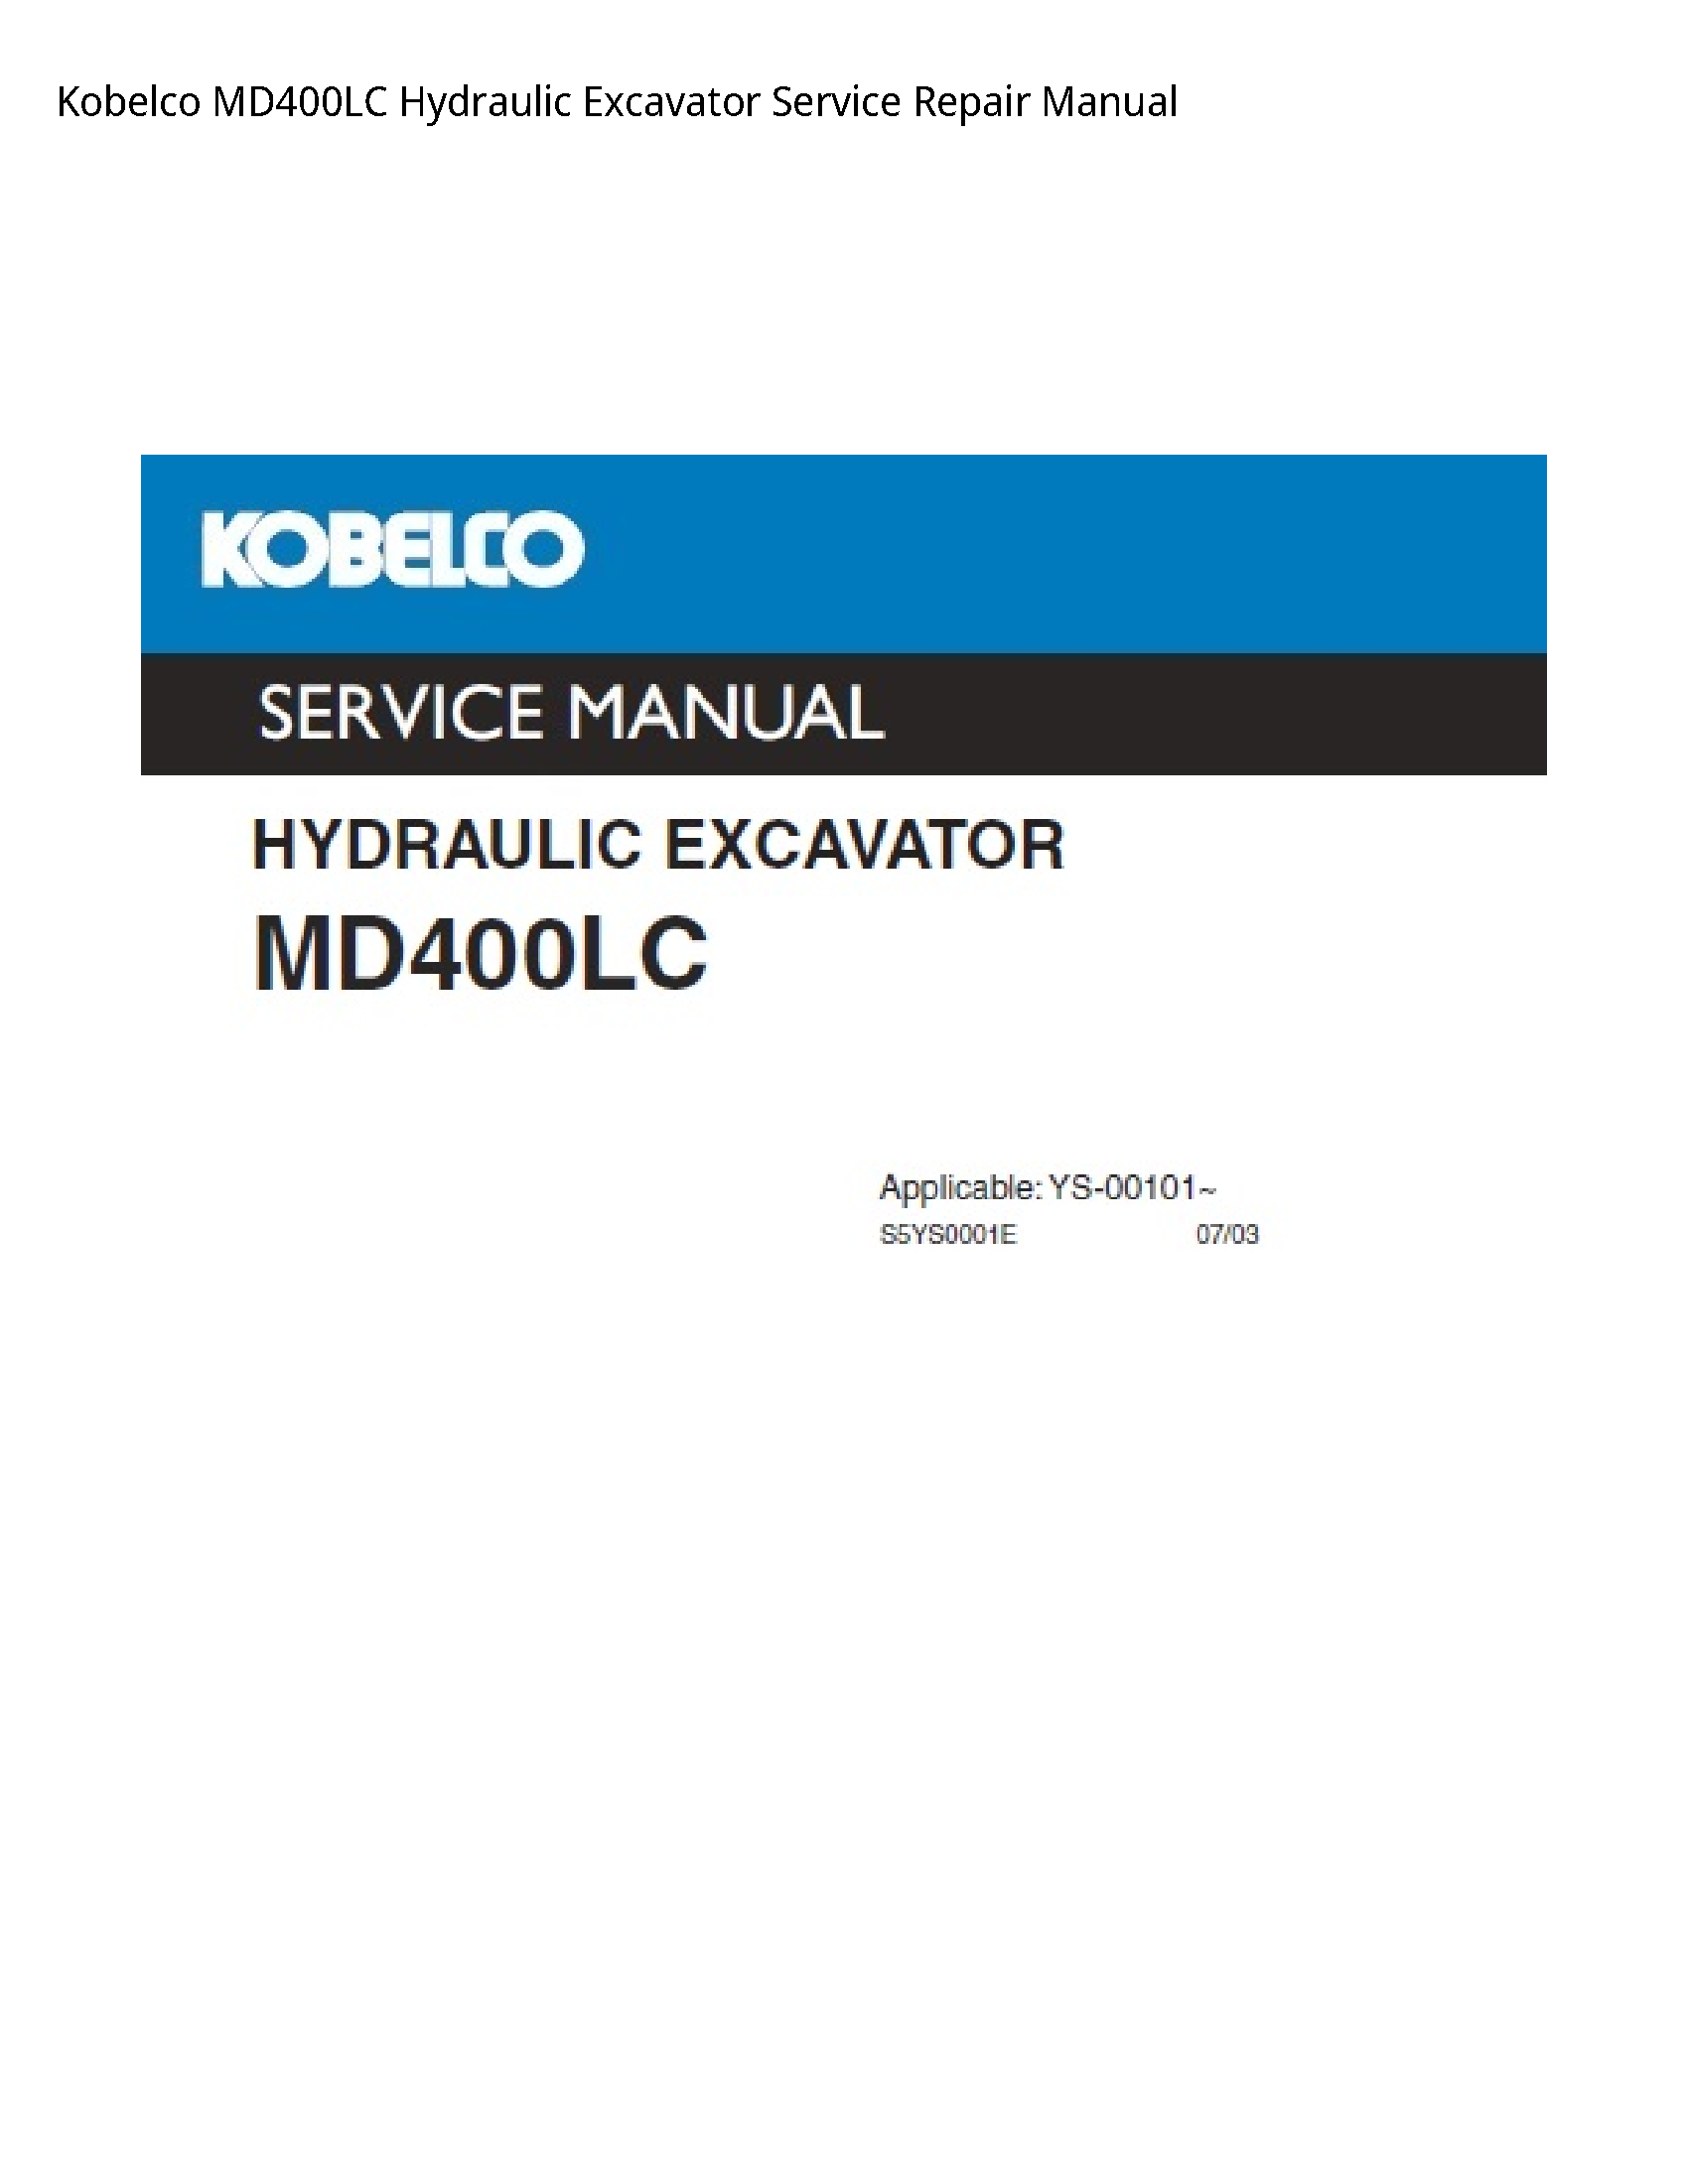 Kobelco MD400LC Hydraulic Excavator manual